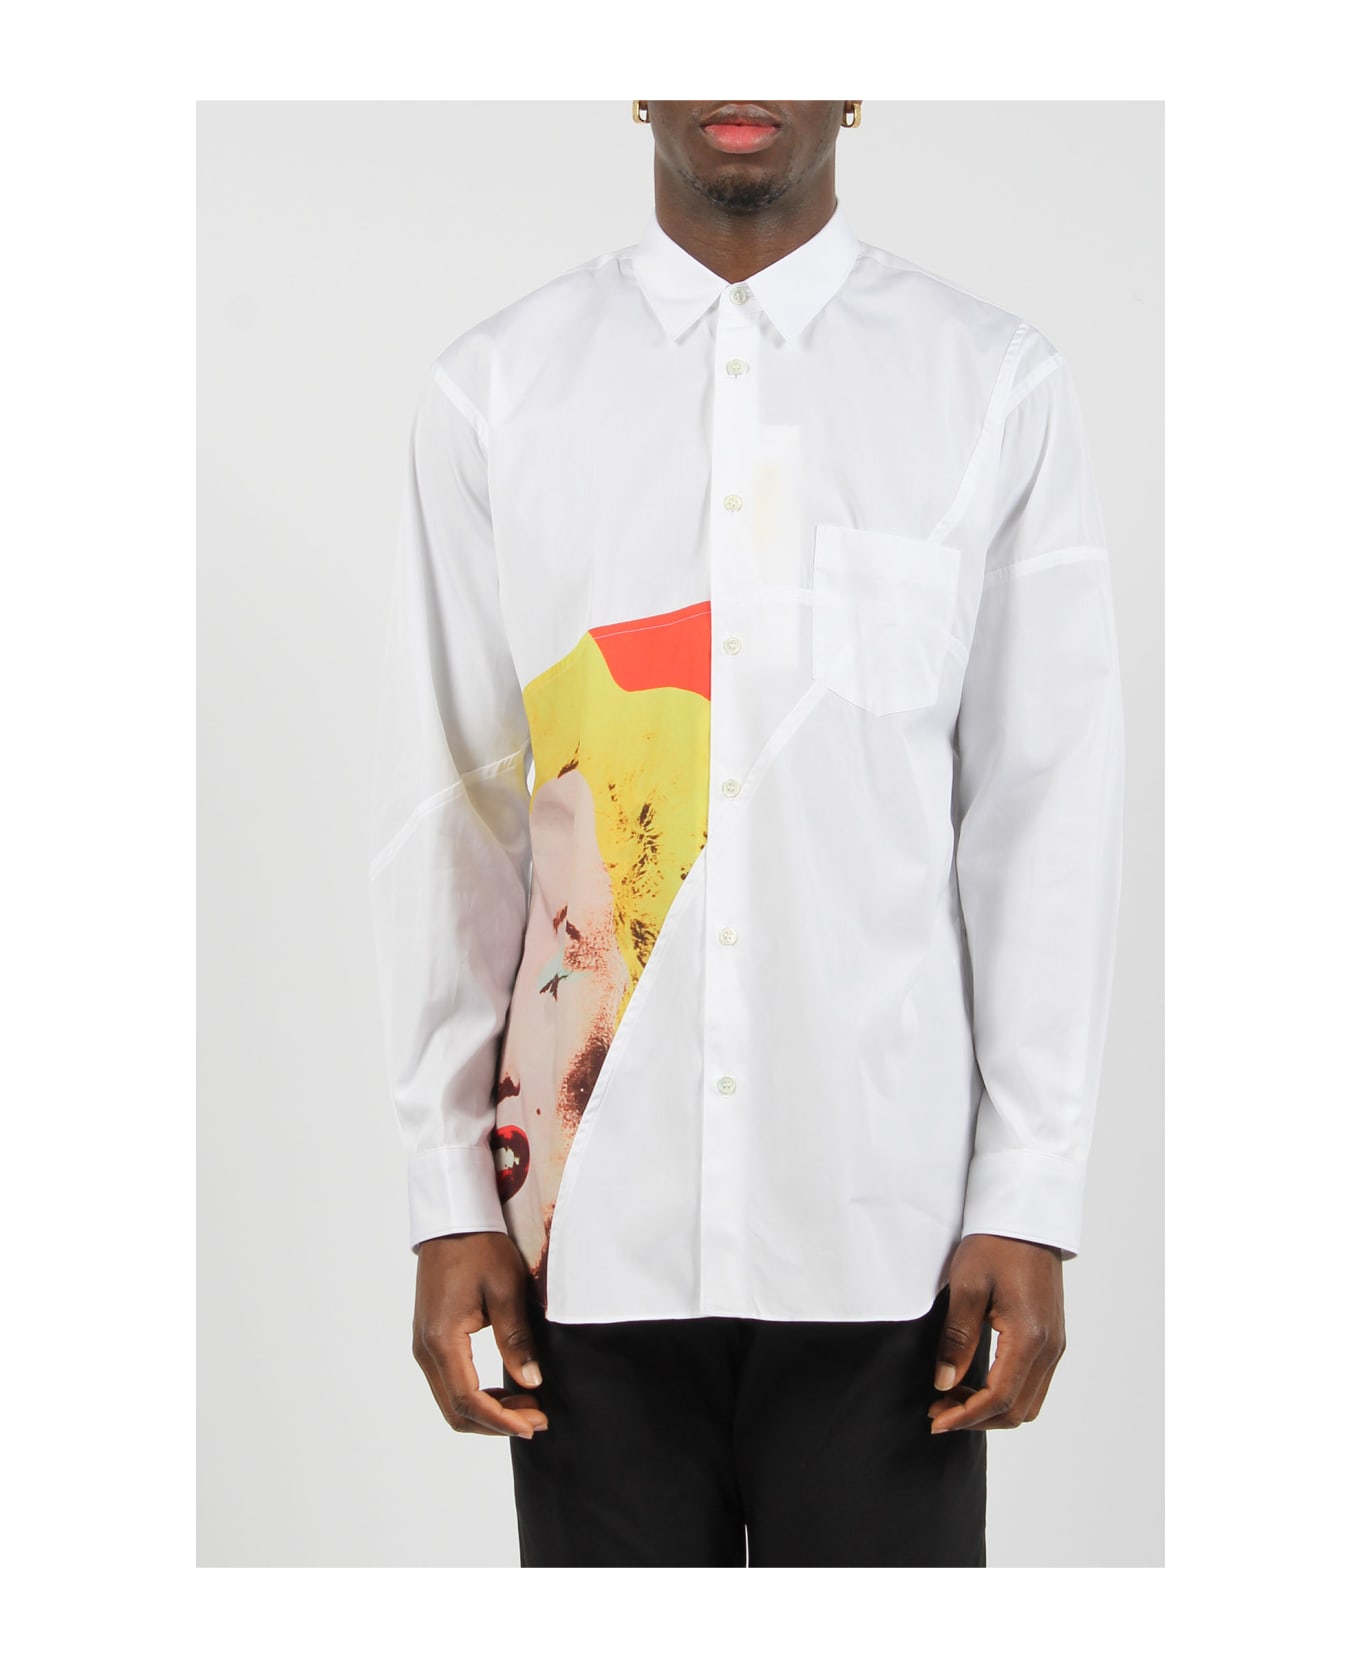 Comme des Garçons Shirt Andy Warhol Shirt - White